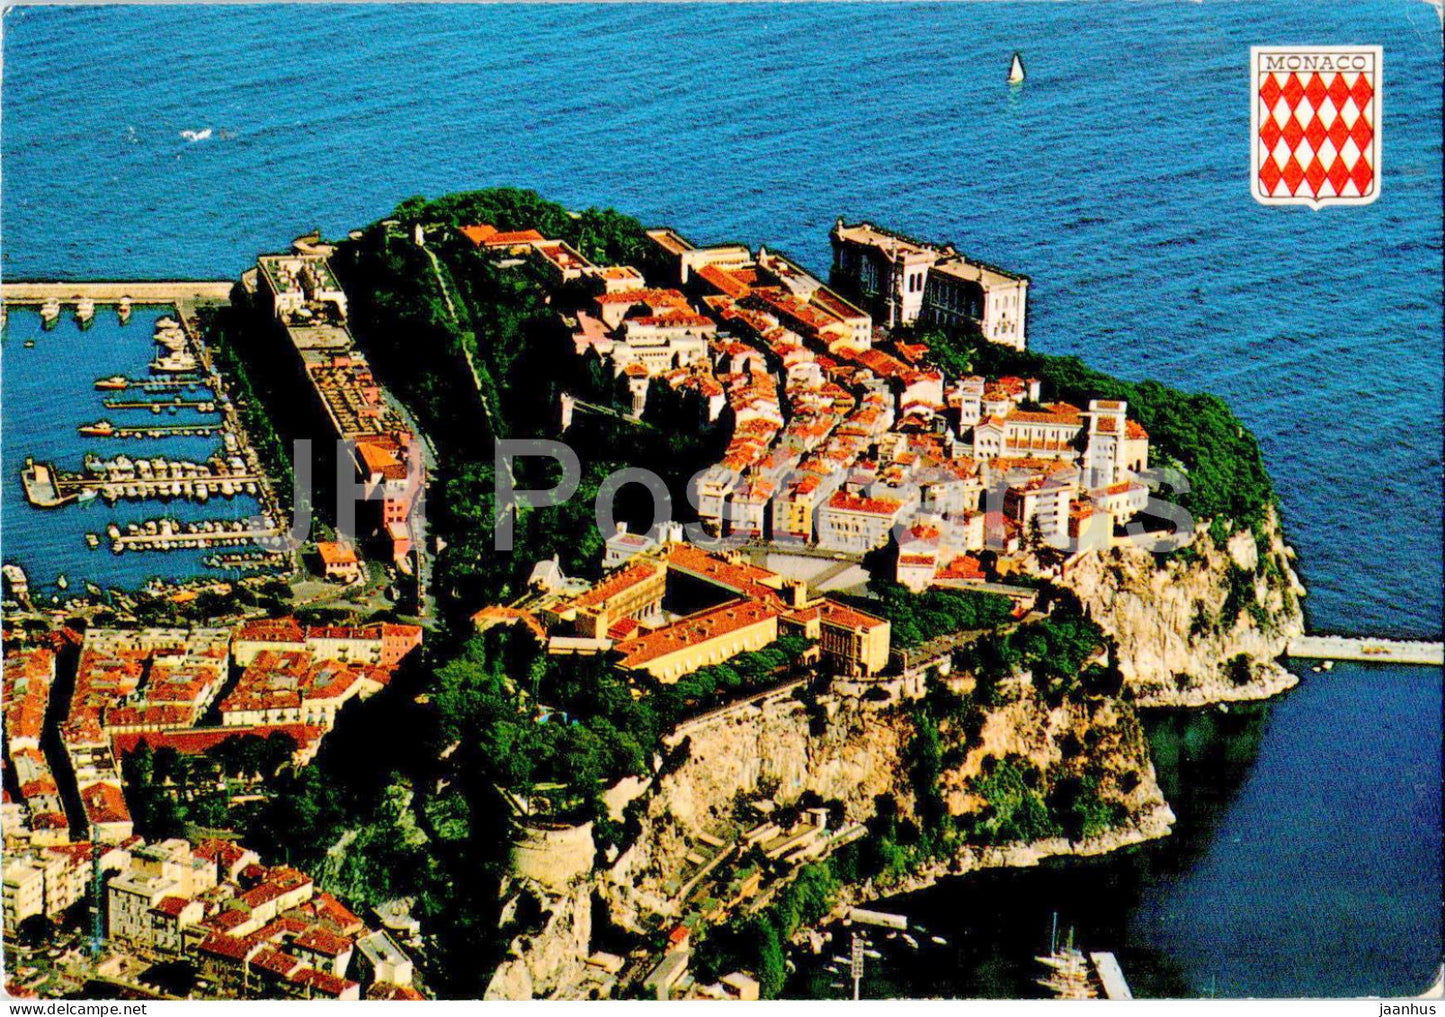 Principaute de Monaco - Vue aerienne du Rocher - Air view of the Rocks - 184 - 1985 - Monaco - used - JH Postcards